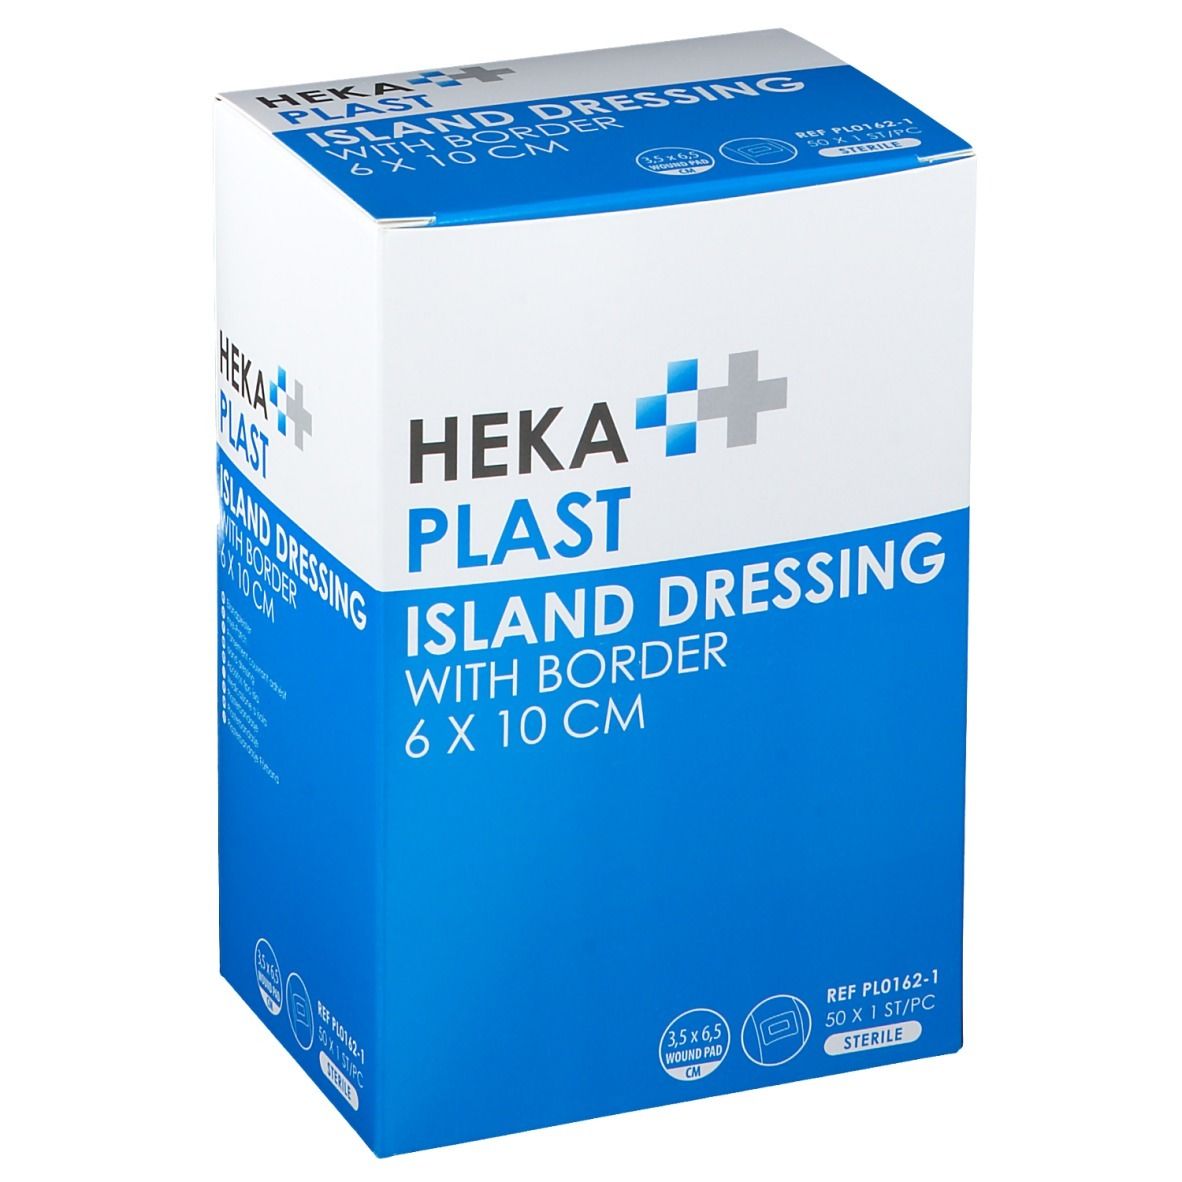 Heka Plast Island Dressing With border 6 x 10 cm